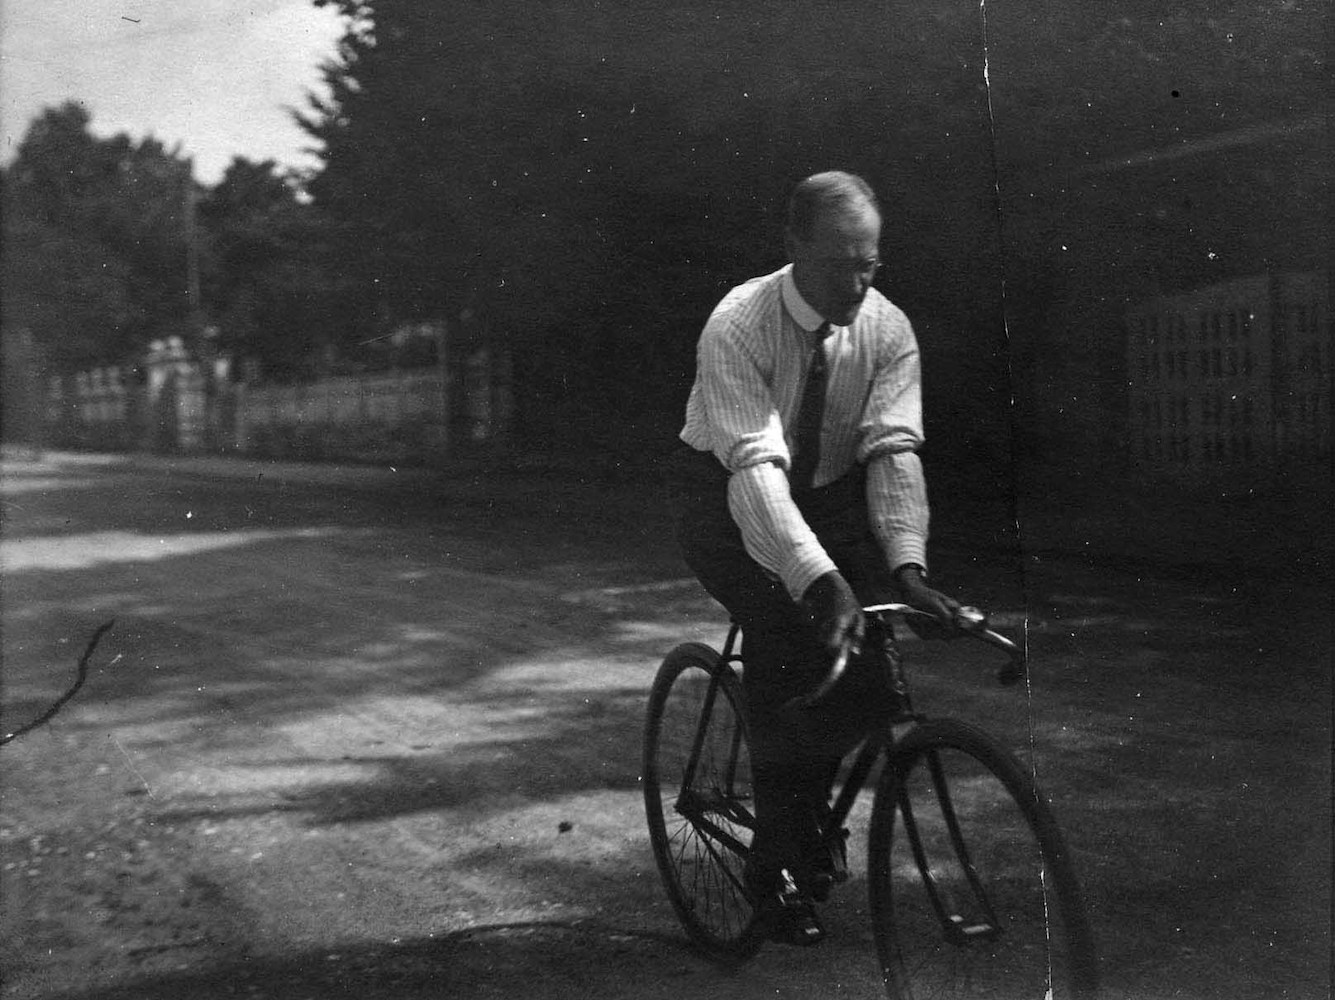 Lyonel Feininger on his bicycle, Weimar